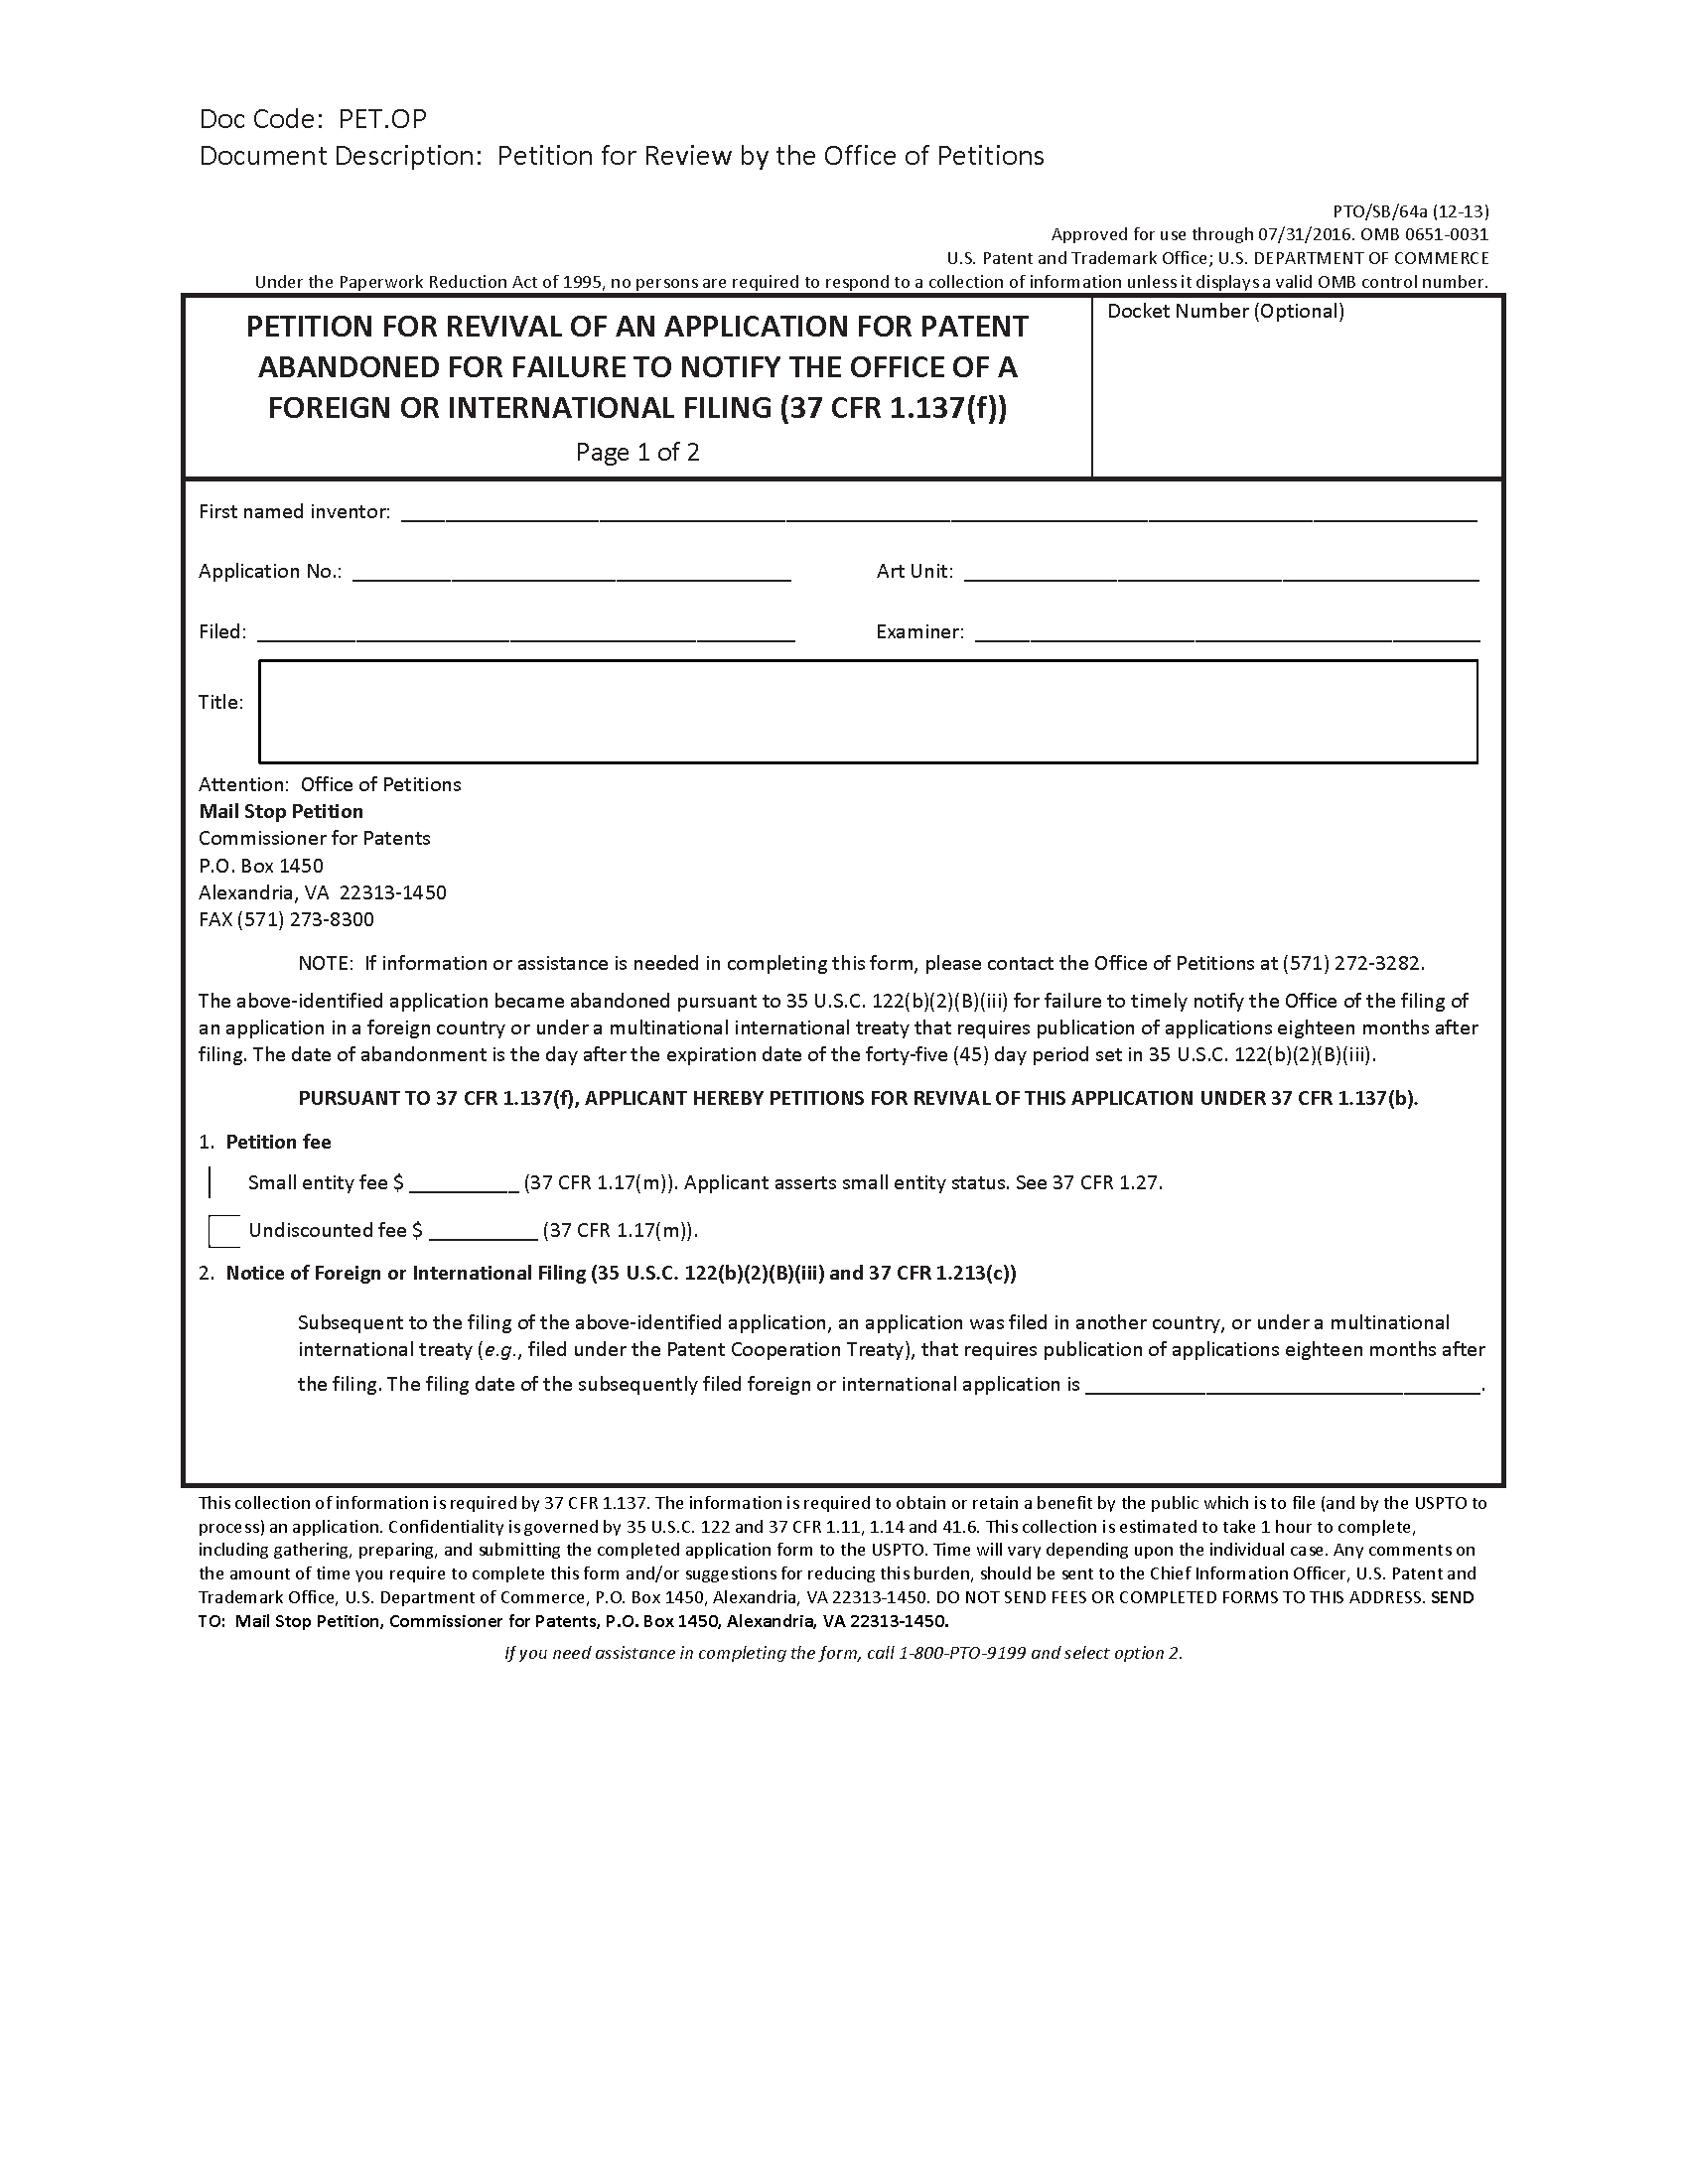 mcgill refund application acceptance fee